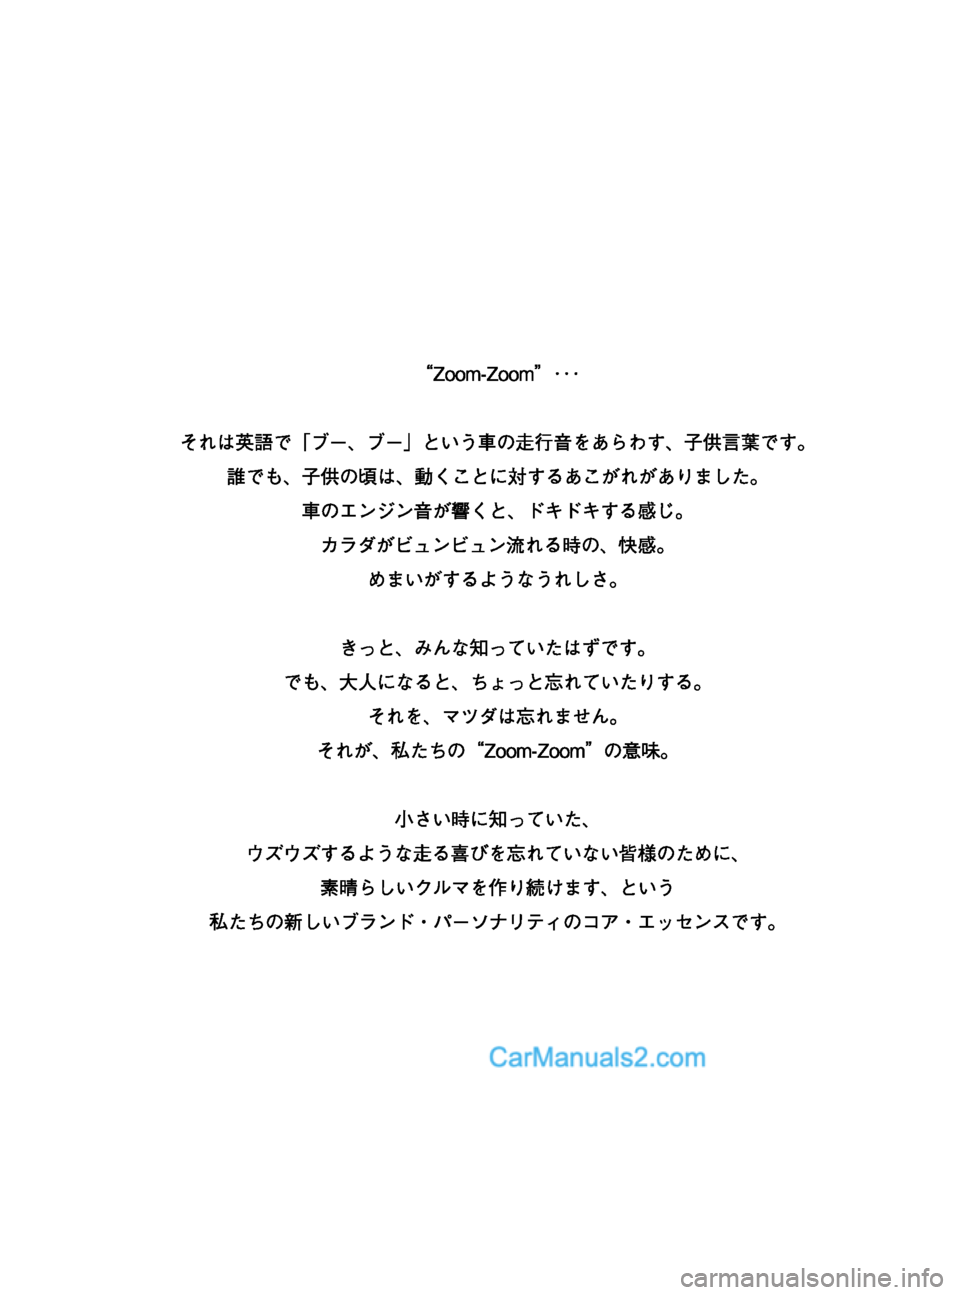 MAZDA MODEL VERISA 2007  ベリーサ｜取扱説明書 (in Japanese) Black plate (1,1)
VERISA_Ｄウ_初版1ページ
2014年7月30日08:35 AM
Form No.Ｄウ  